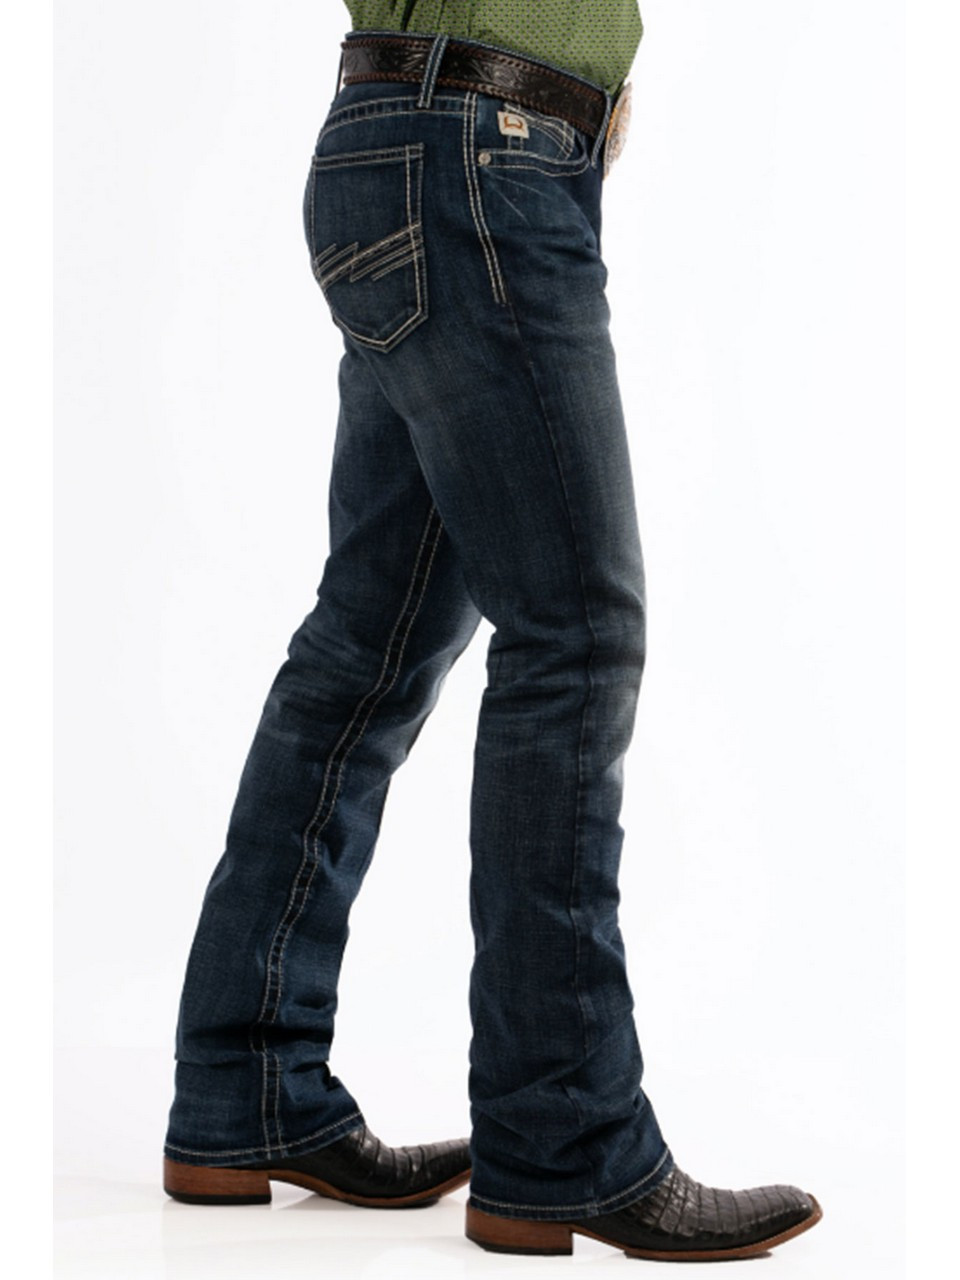 dark bootcut jeans mens